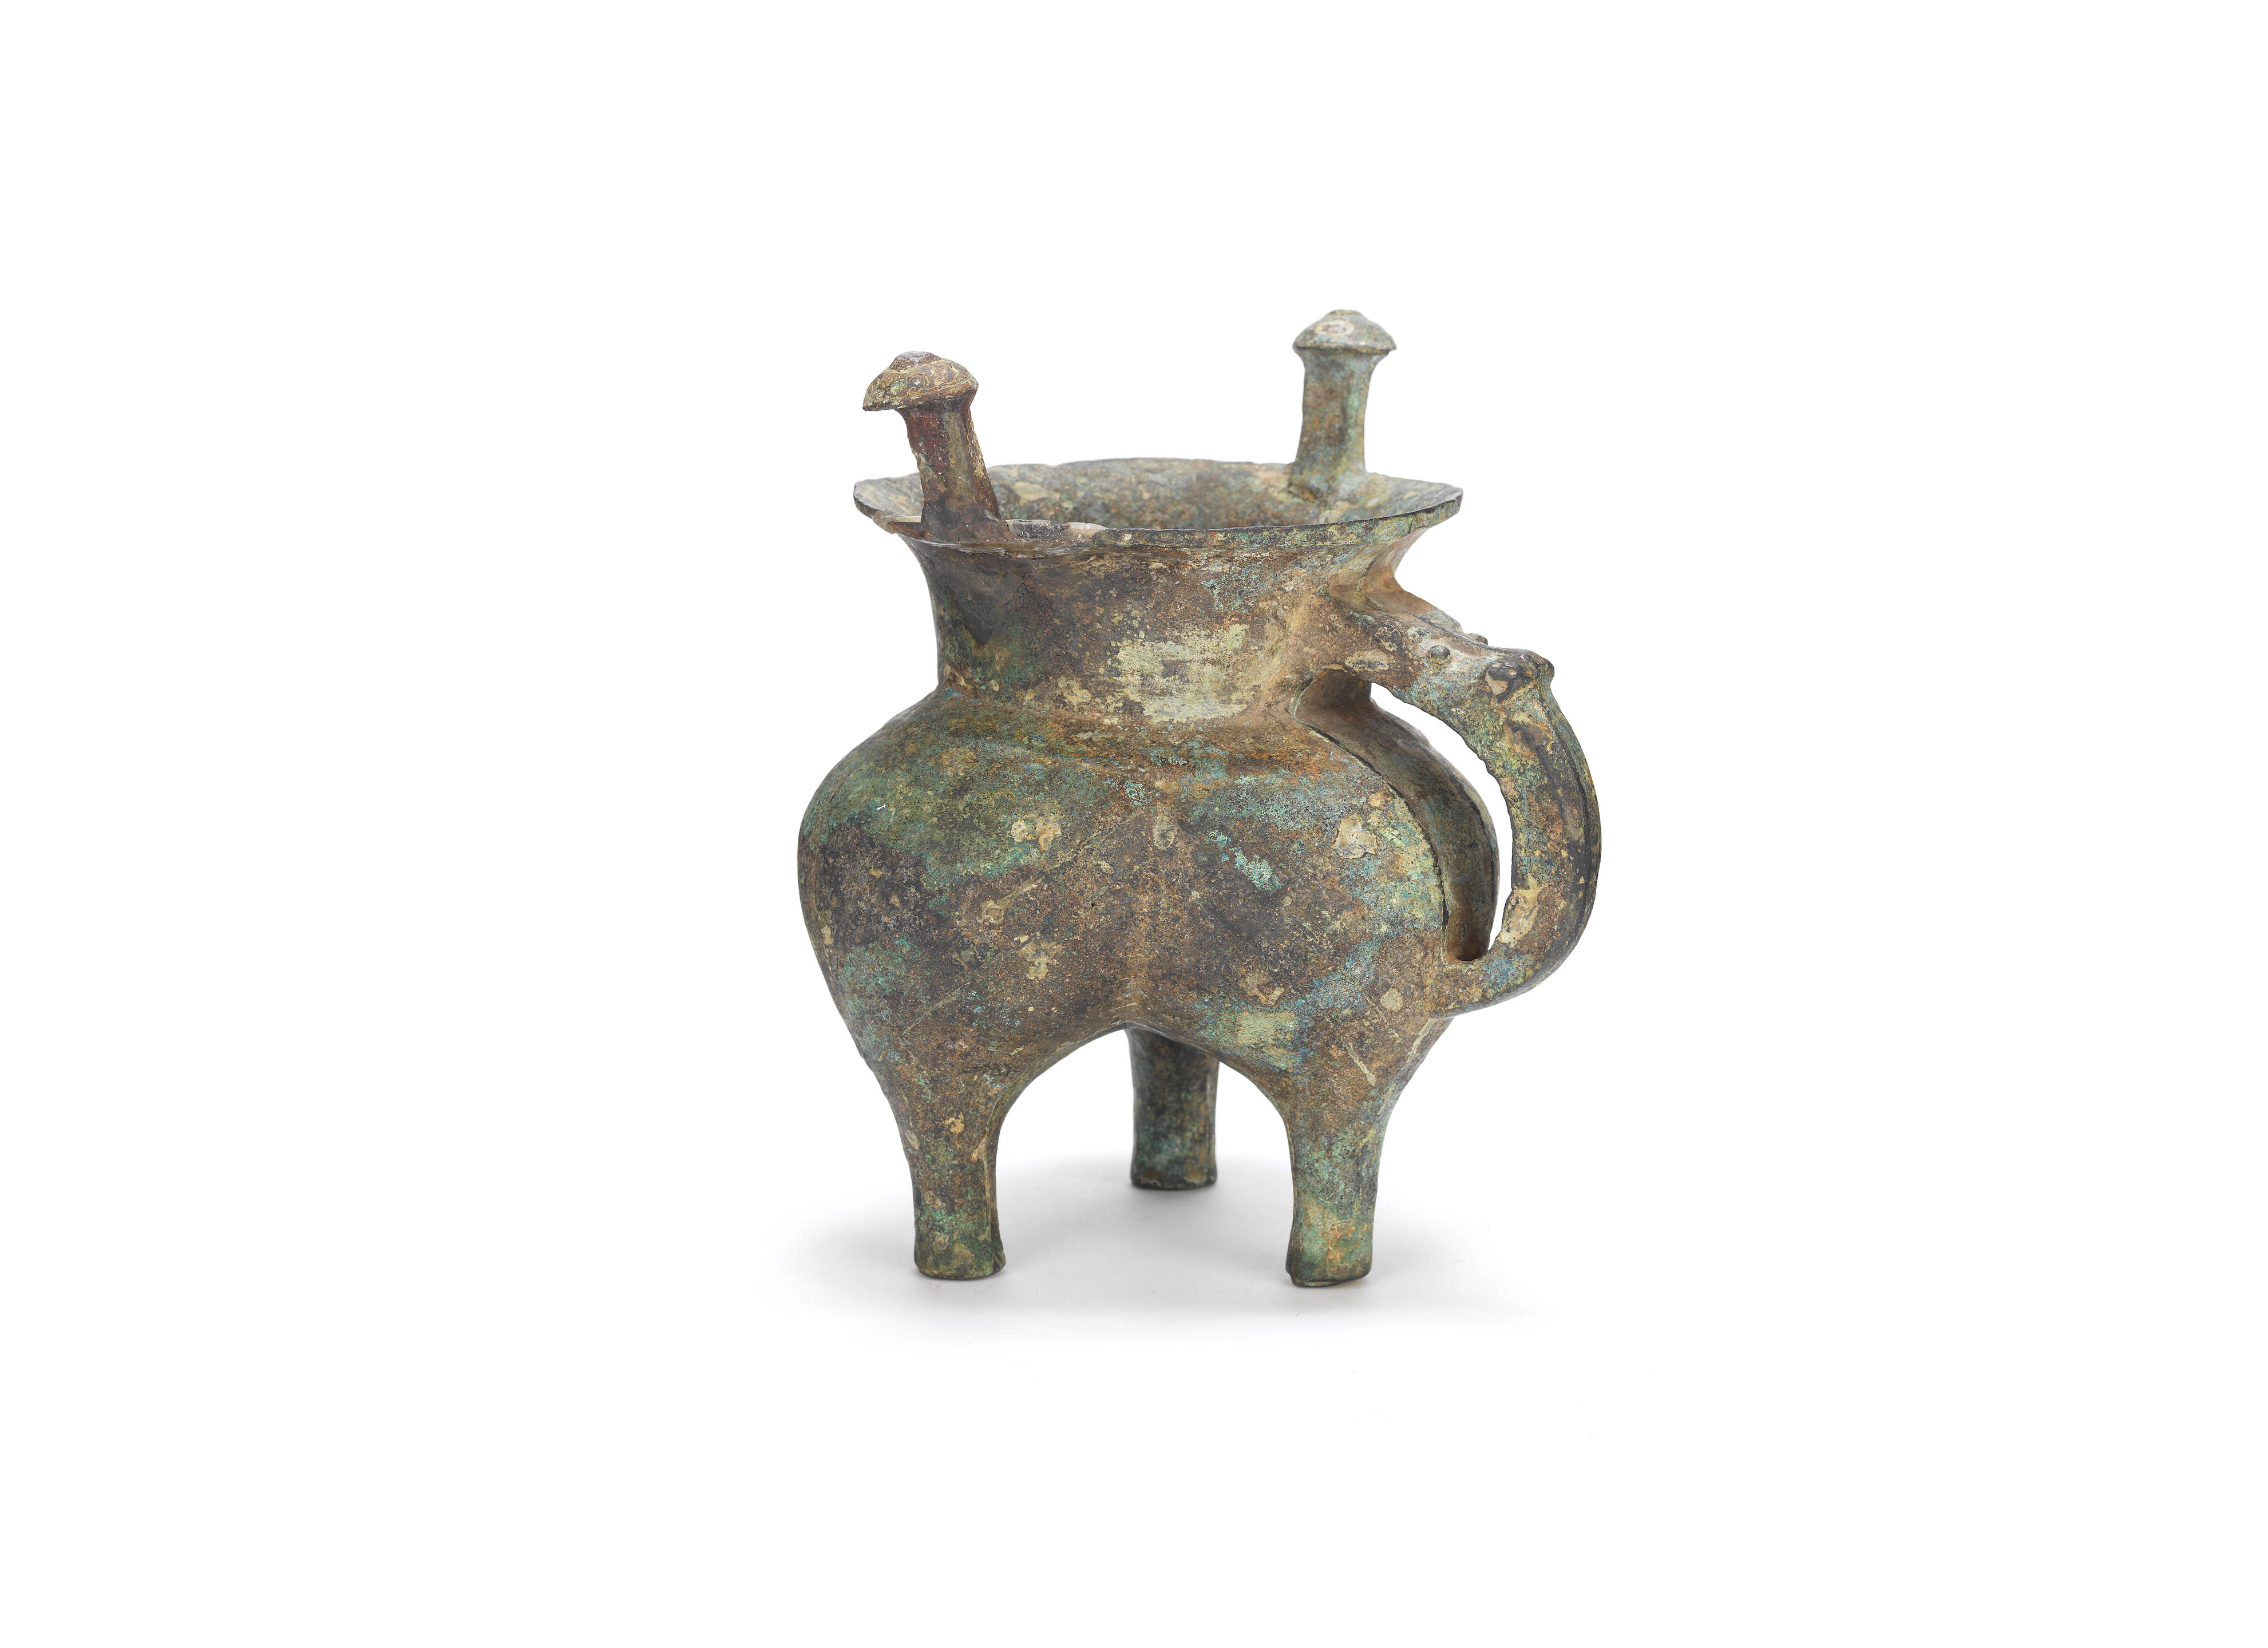 An archaic bronze ritual tripod vessel, jia